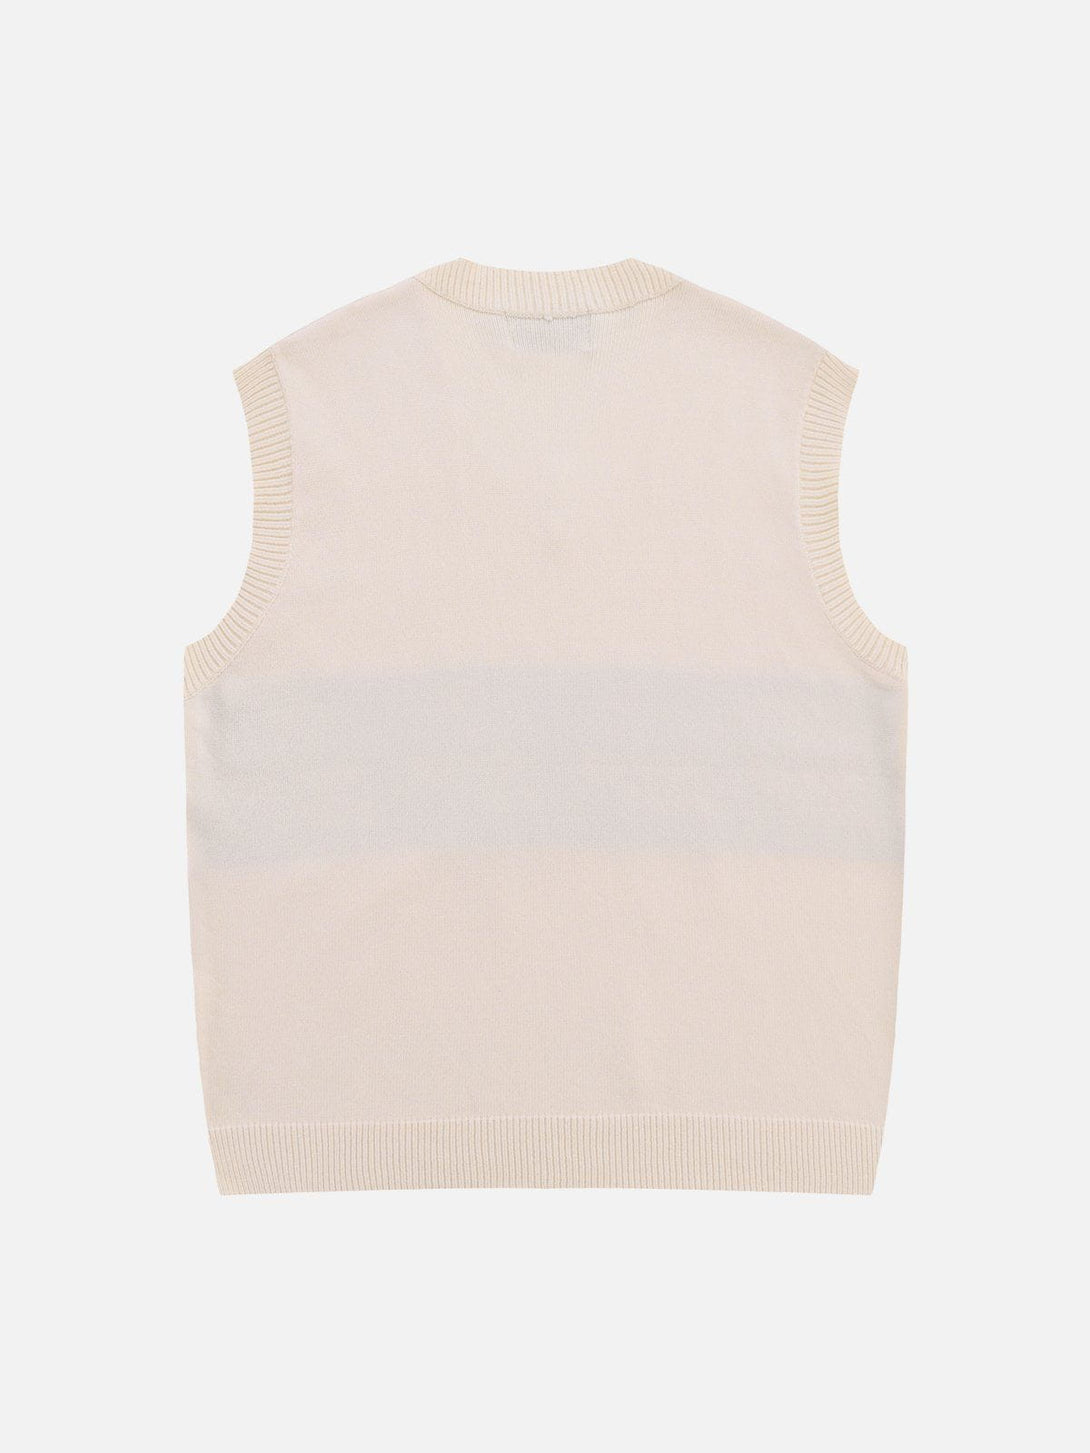 Majesda® - Rose Pattern Sweater Vest outfit ideas streetwear fashion